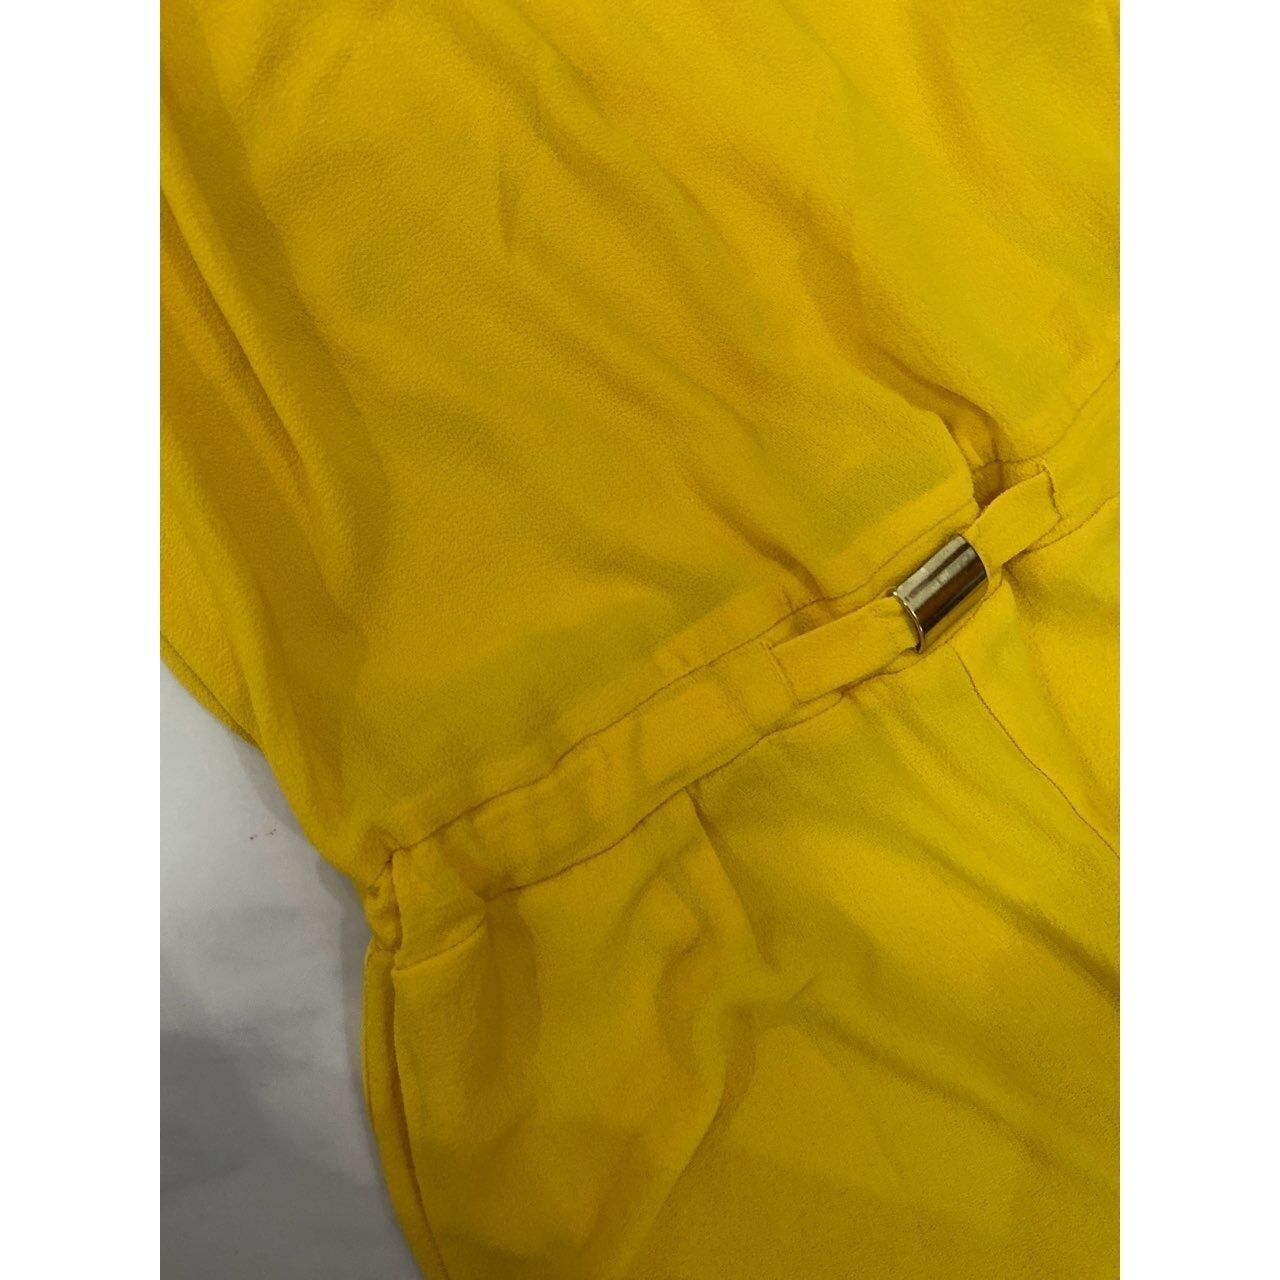 Zara Yellow Jumpsuit